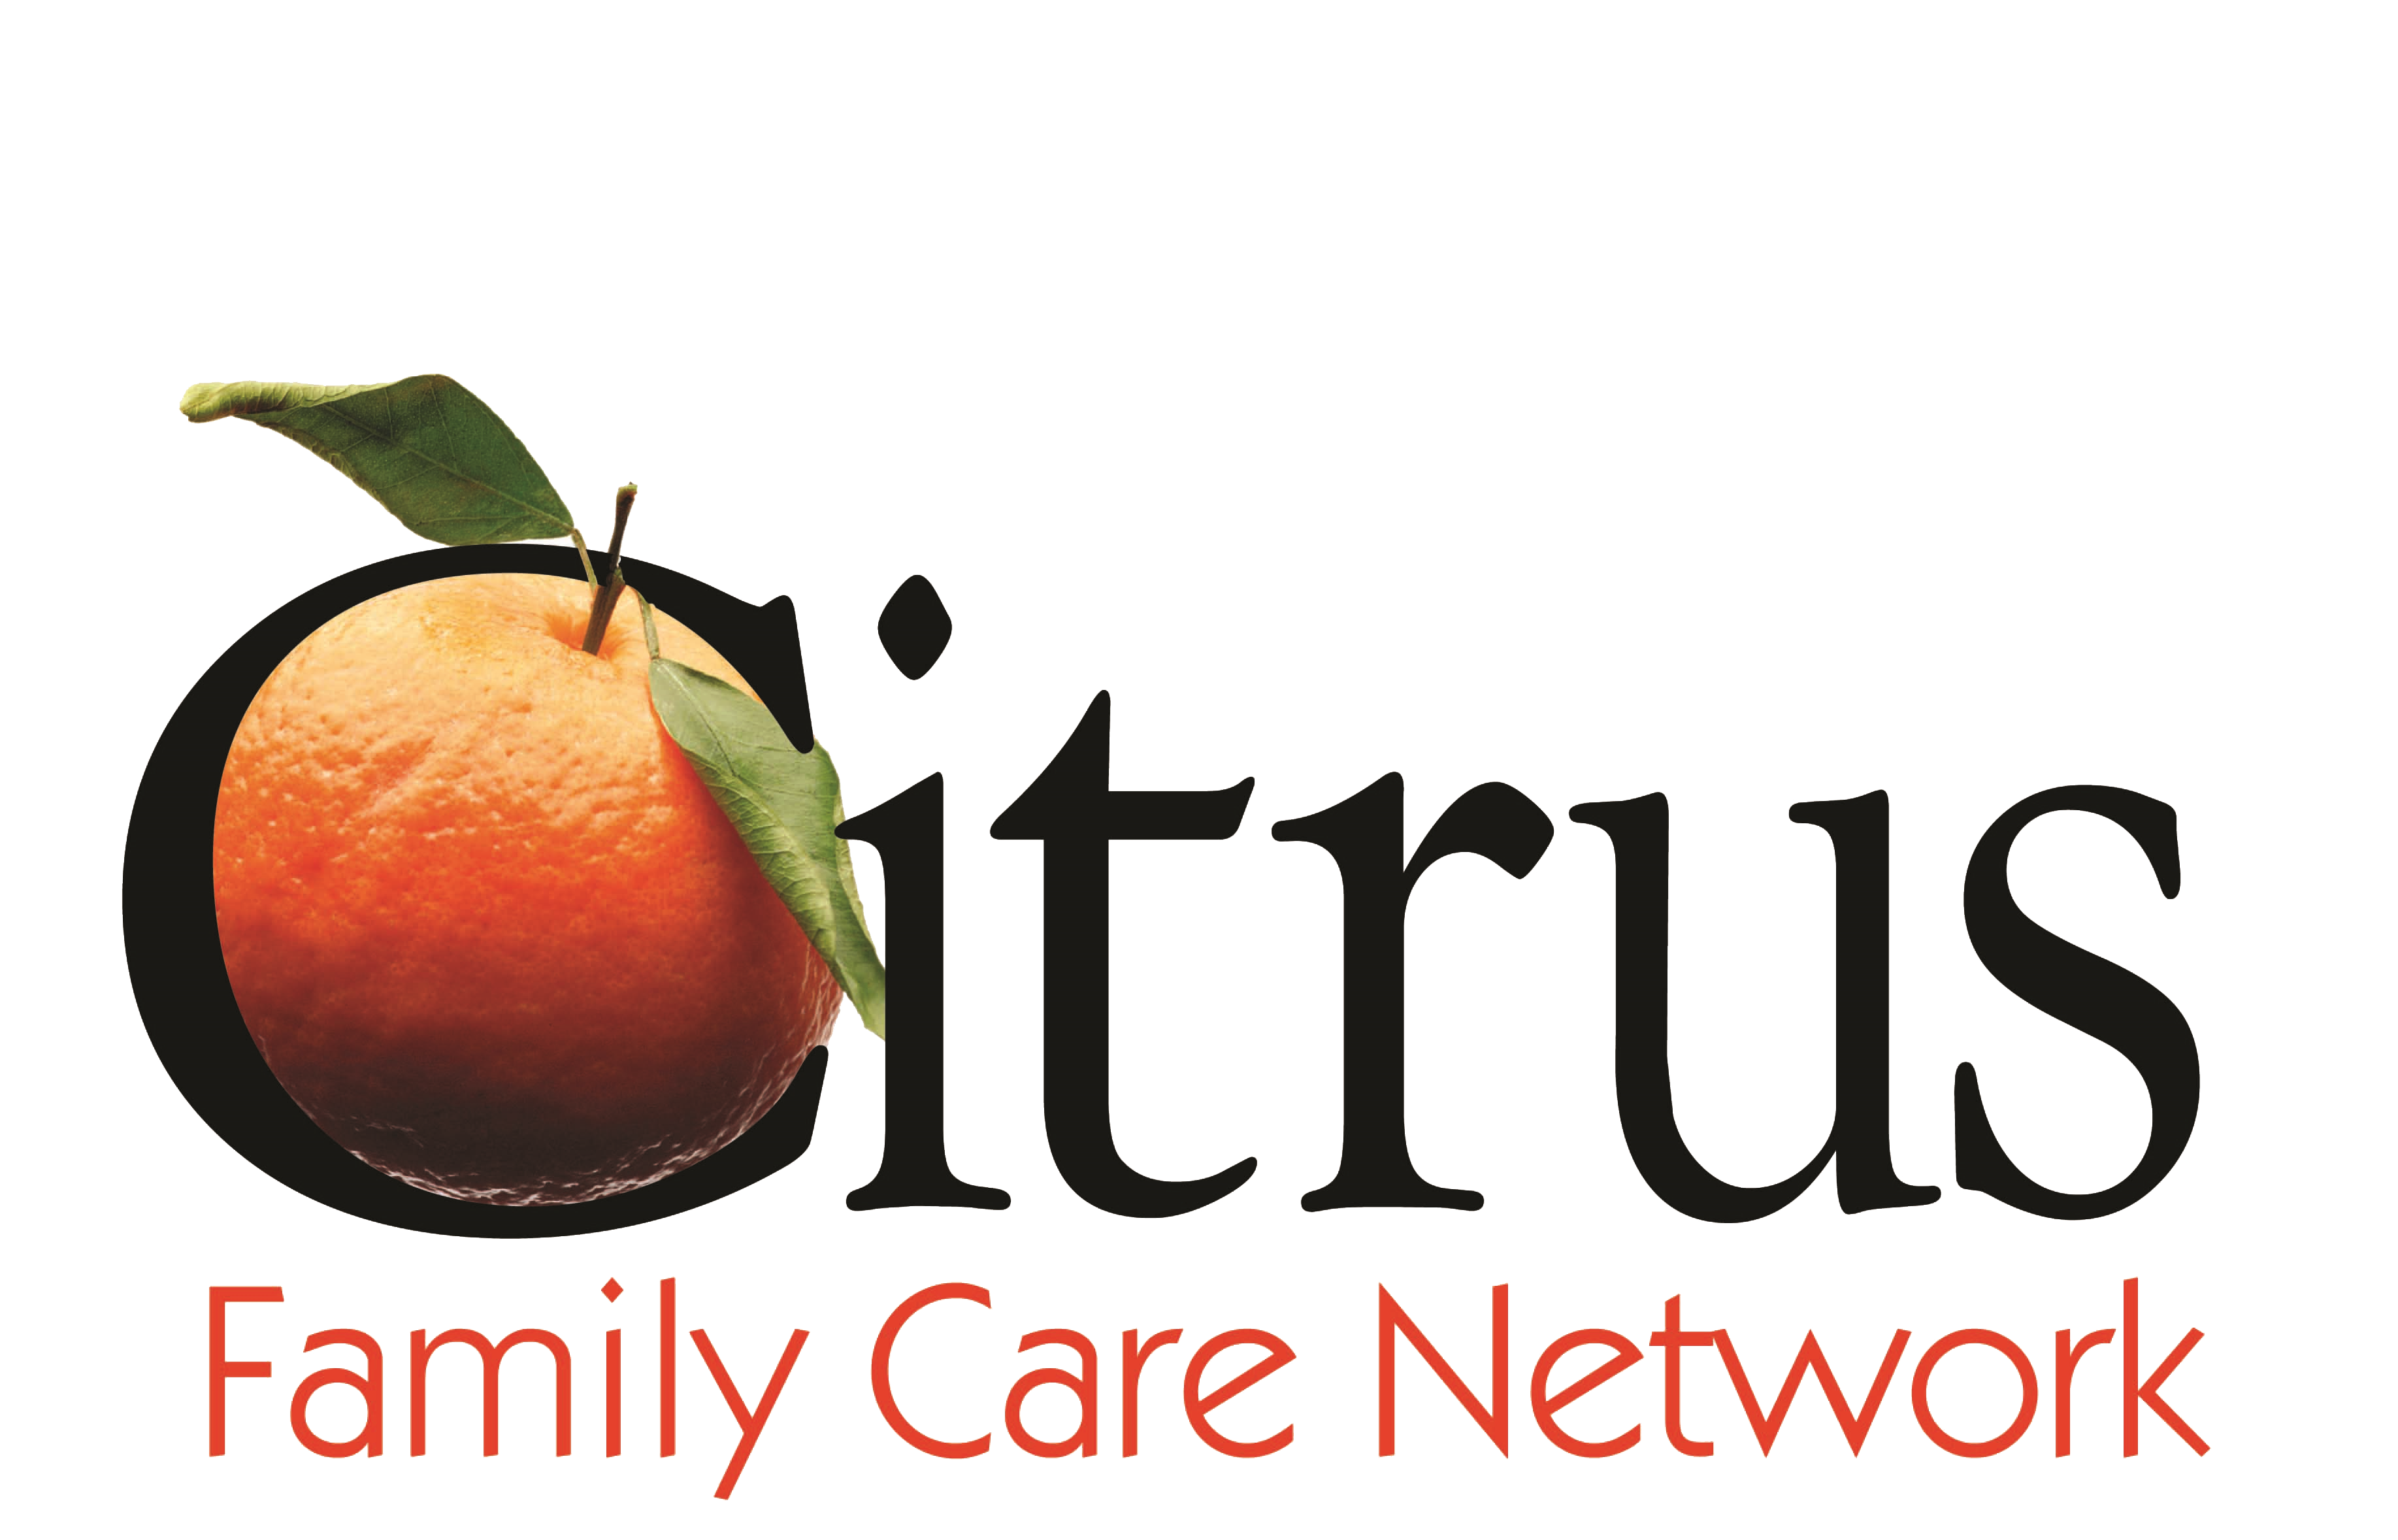 Citrus Family Care Network logo